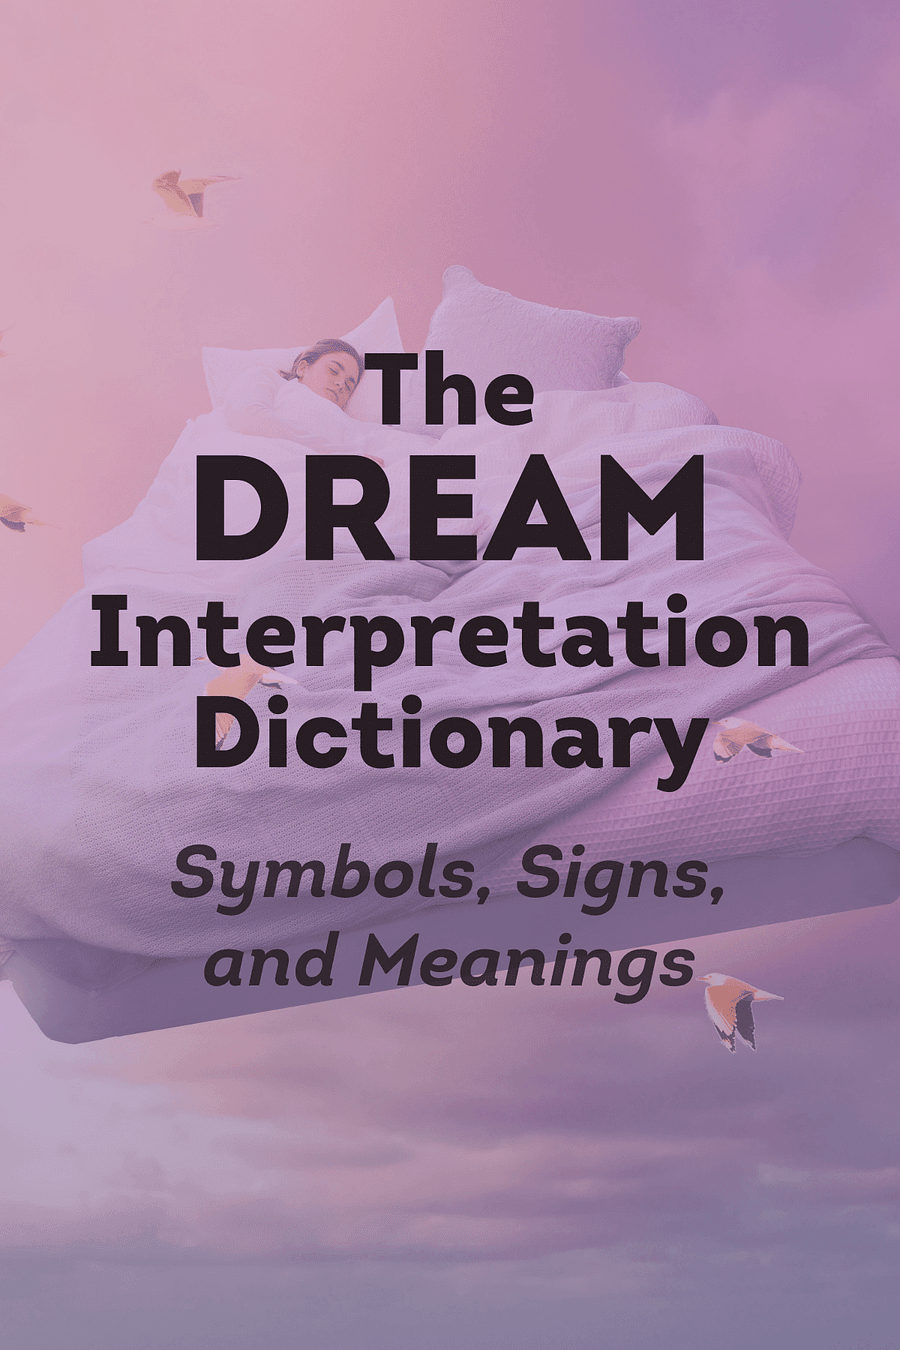 The Dream Interpretation Dictionary by J.M. DeBord - Book Summary